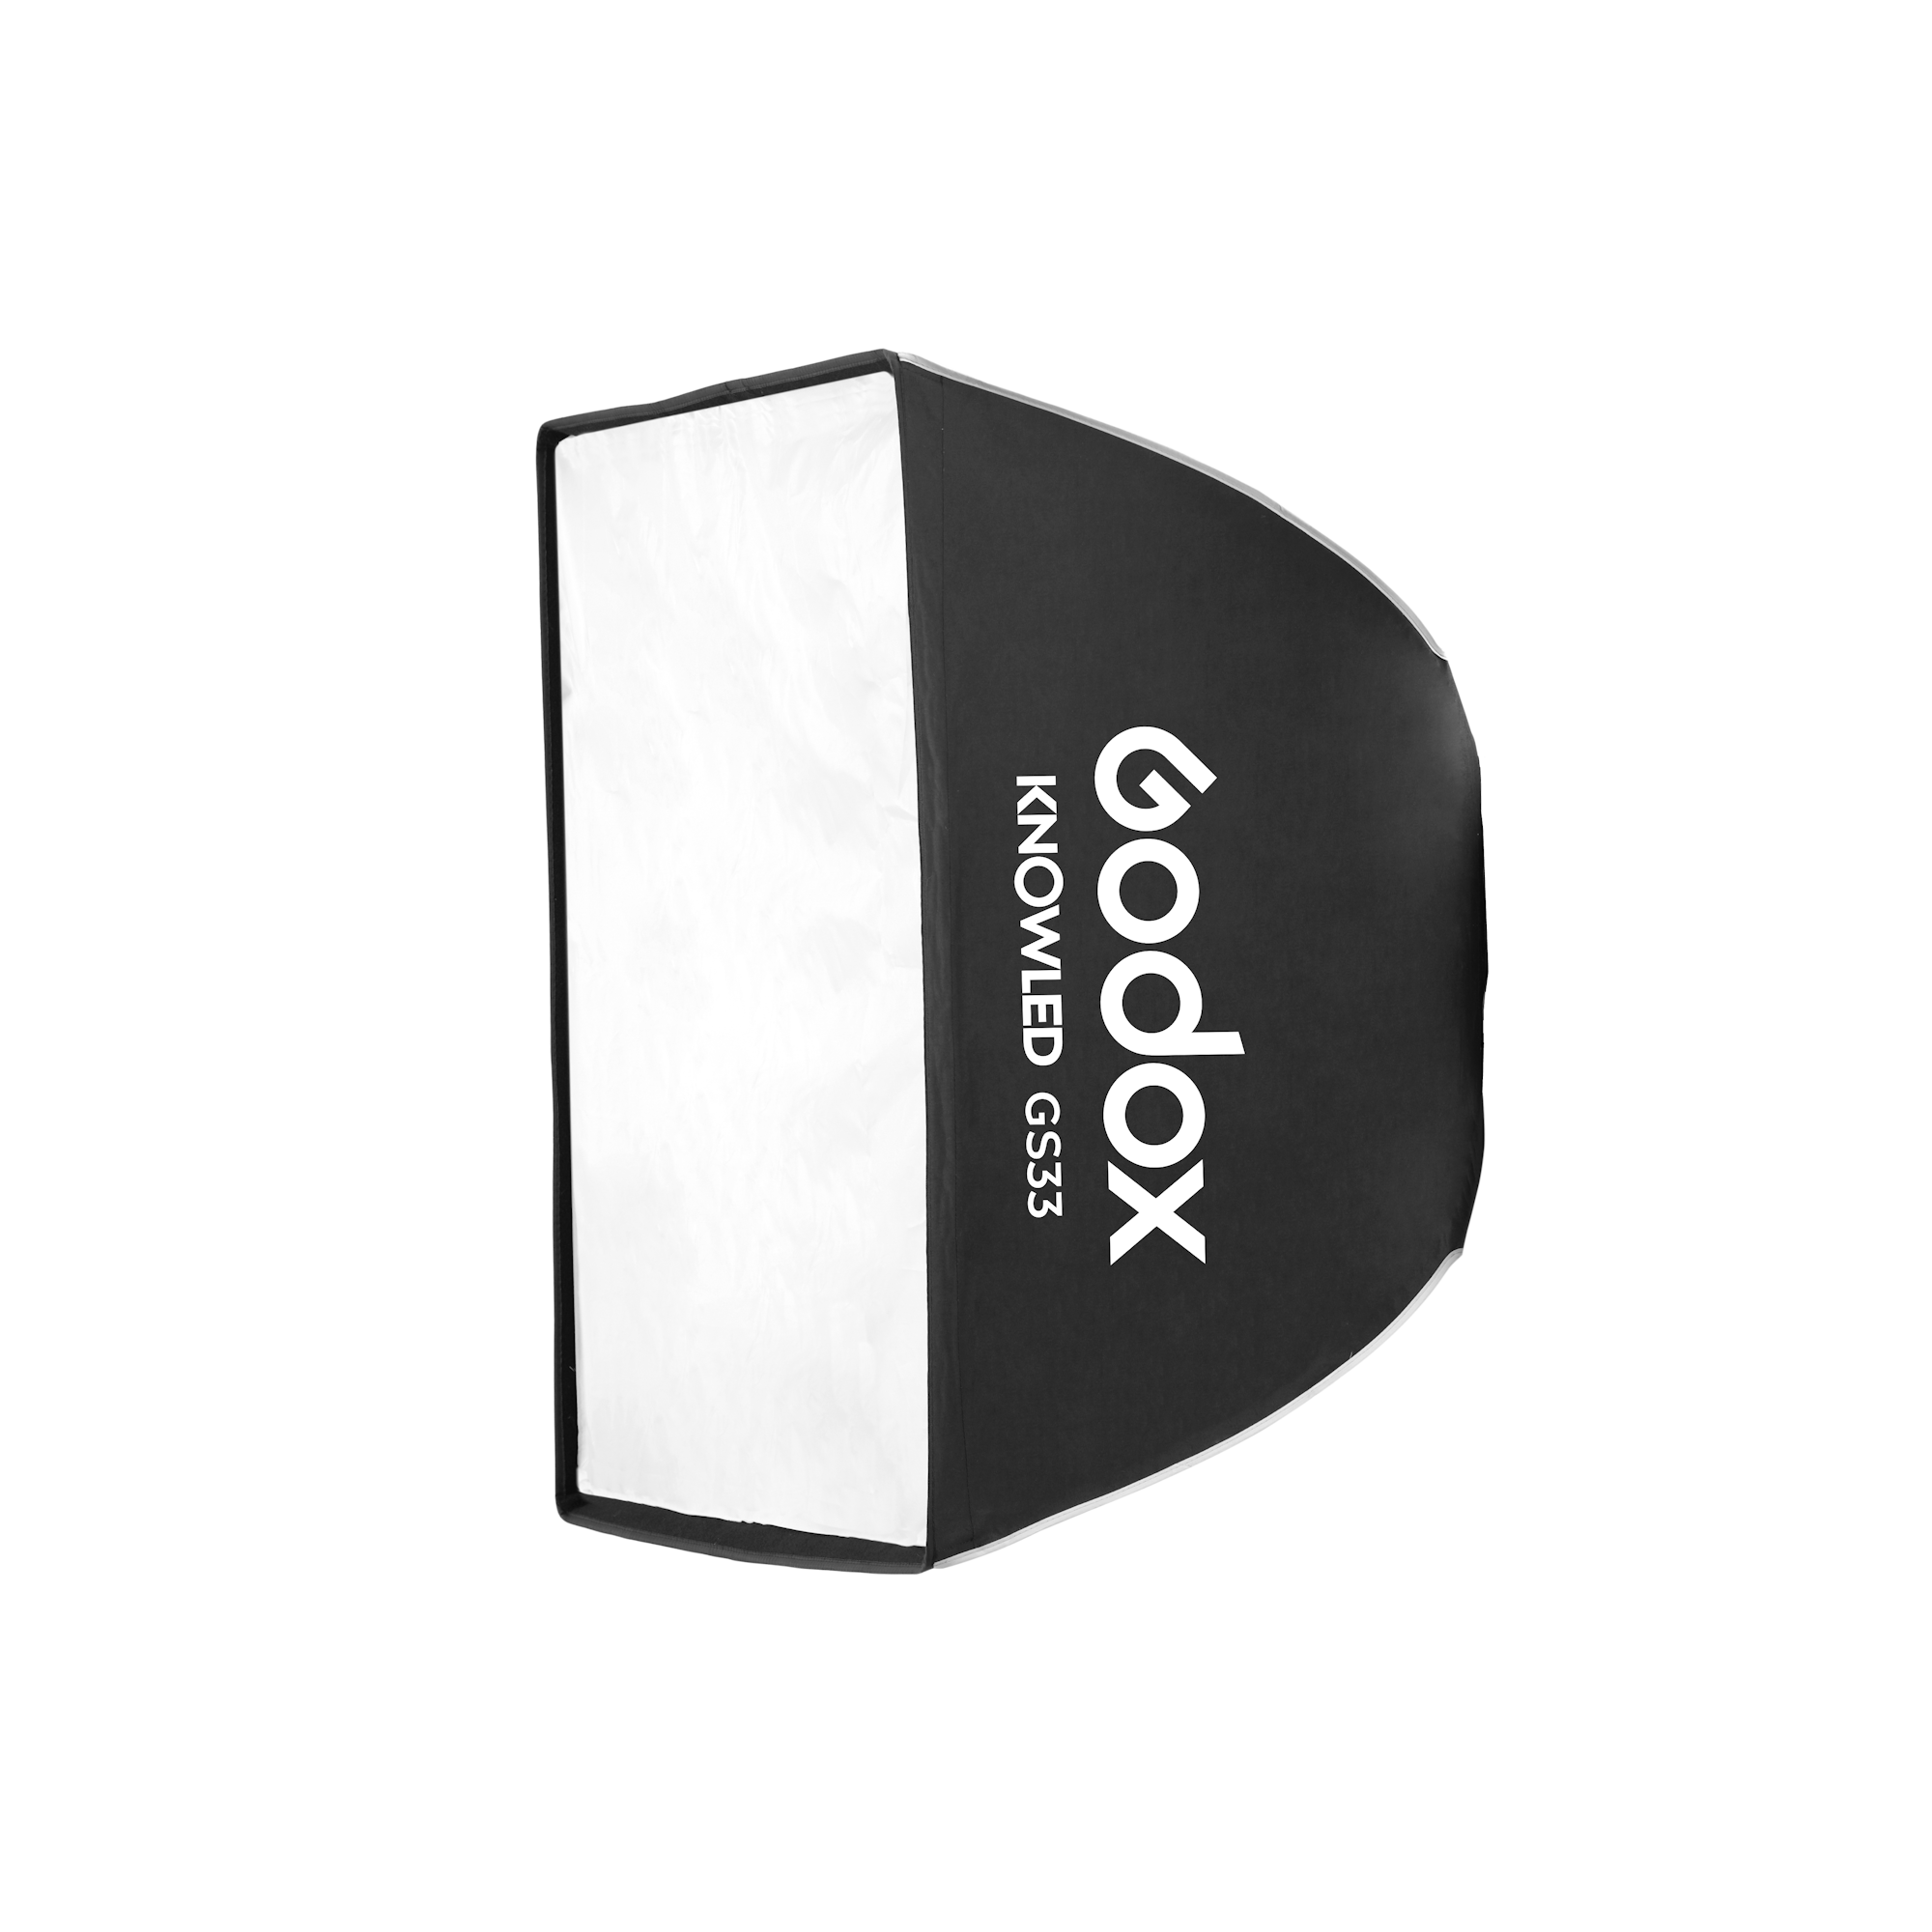   Godox Knowled GS33   G Mount   Ultra-mart